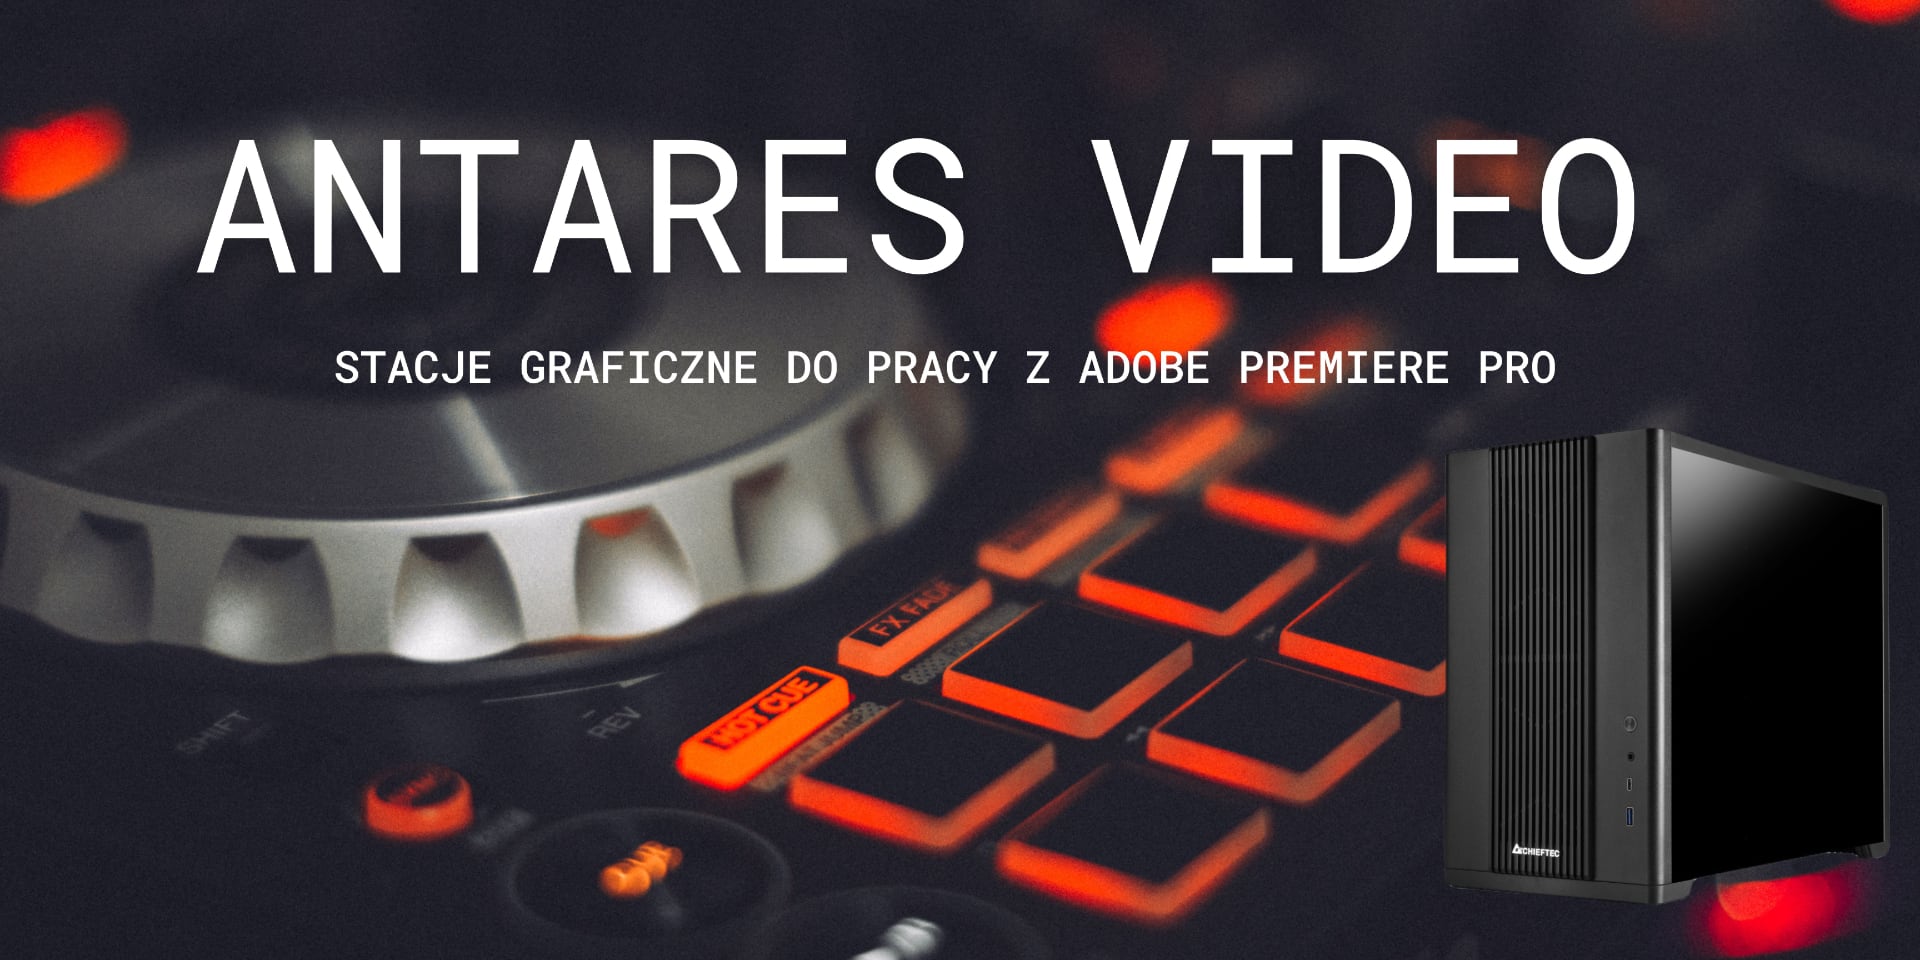 Antares video